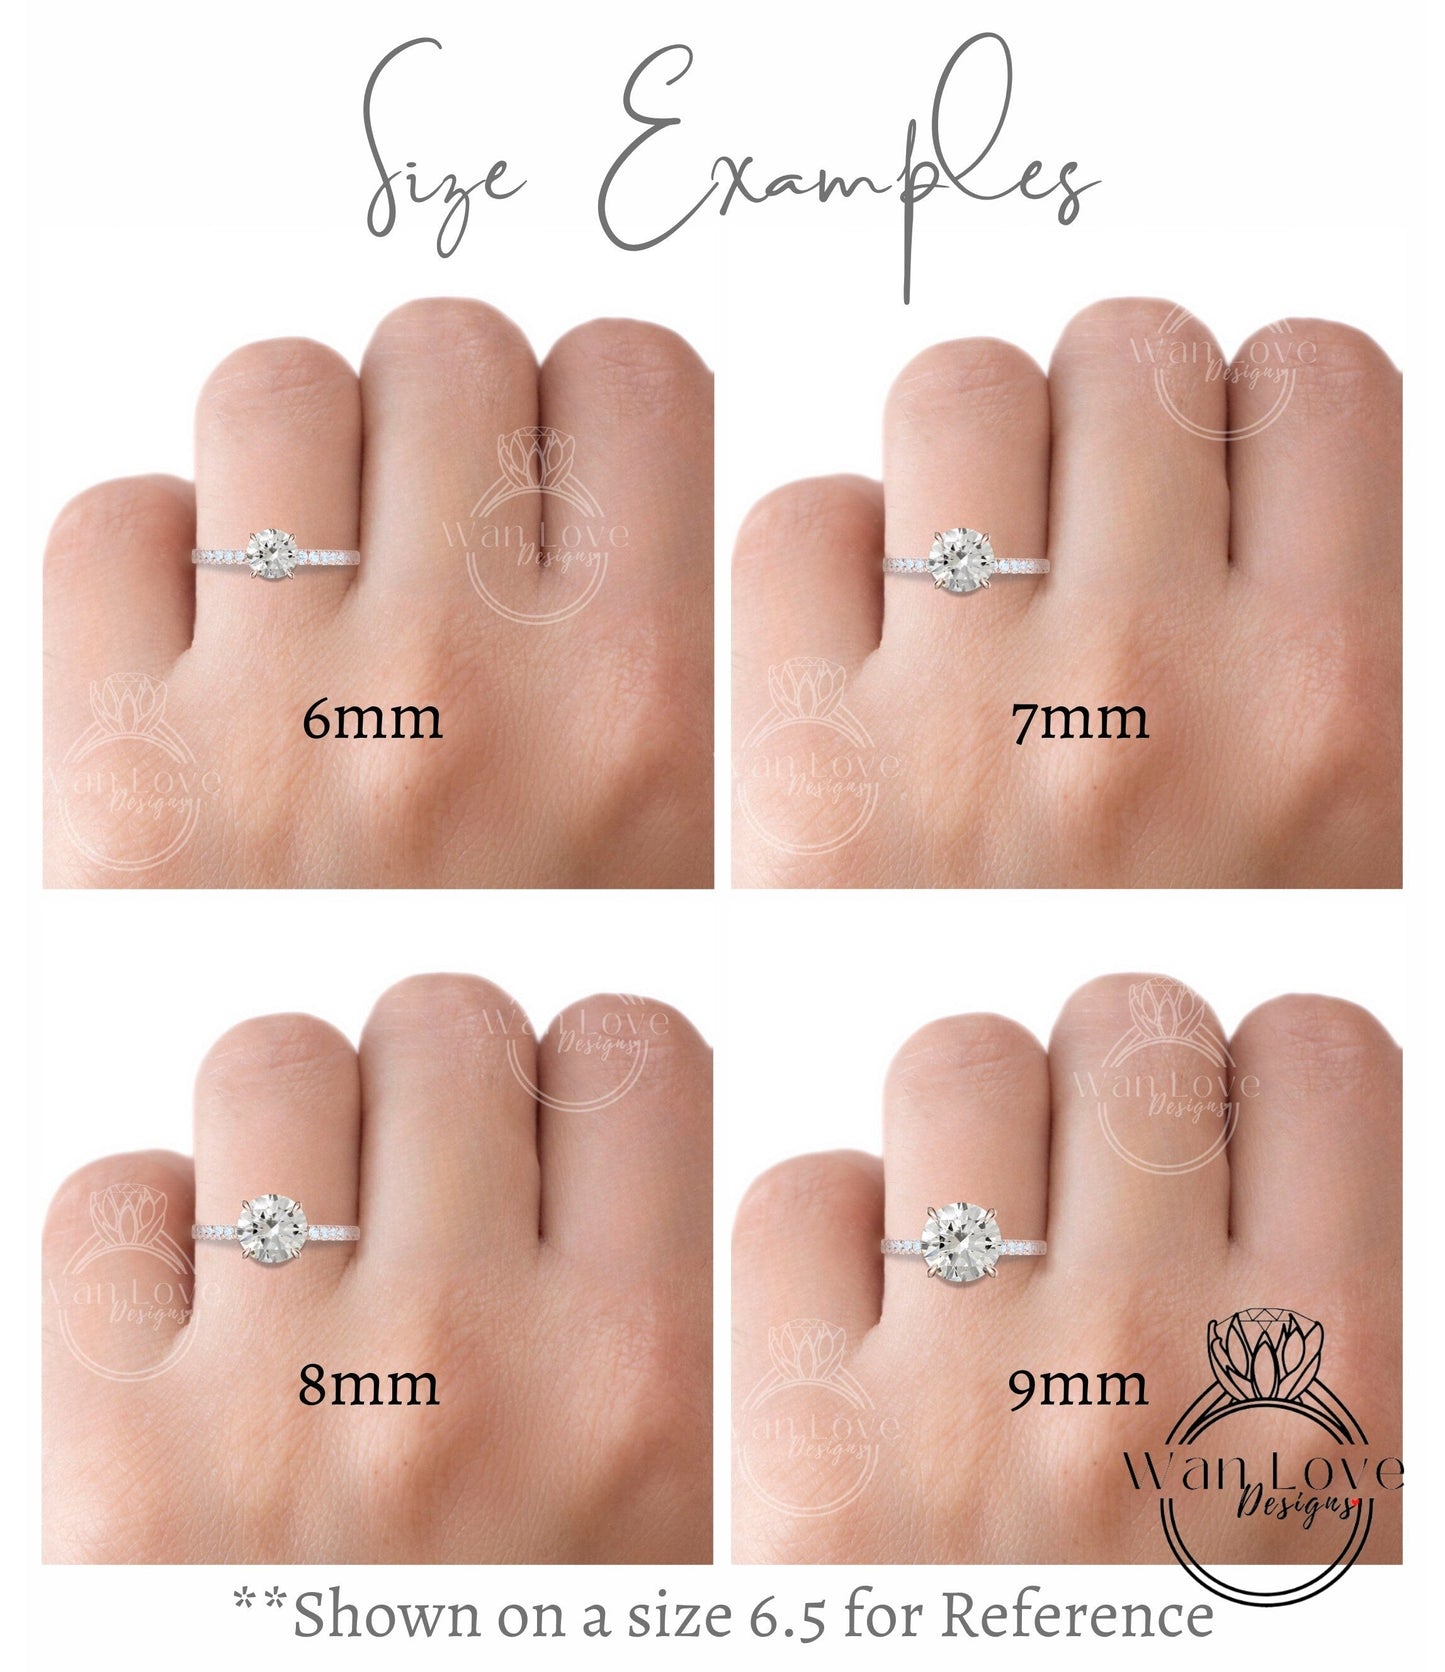 Salt & Pepper Diamond Round 3 triple fishtail prongs Engagement Ring, salt and pepper diamond engagement ring, unique prong bridal ring Wan Love Designs